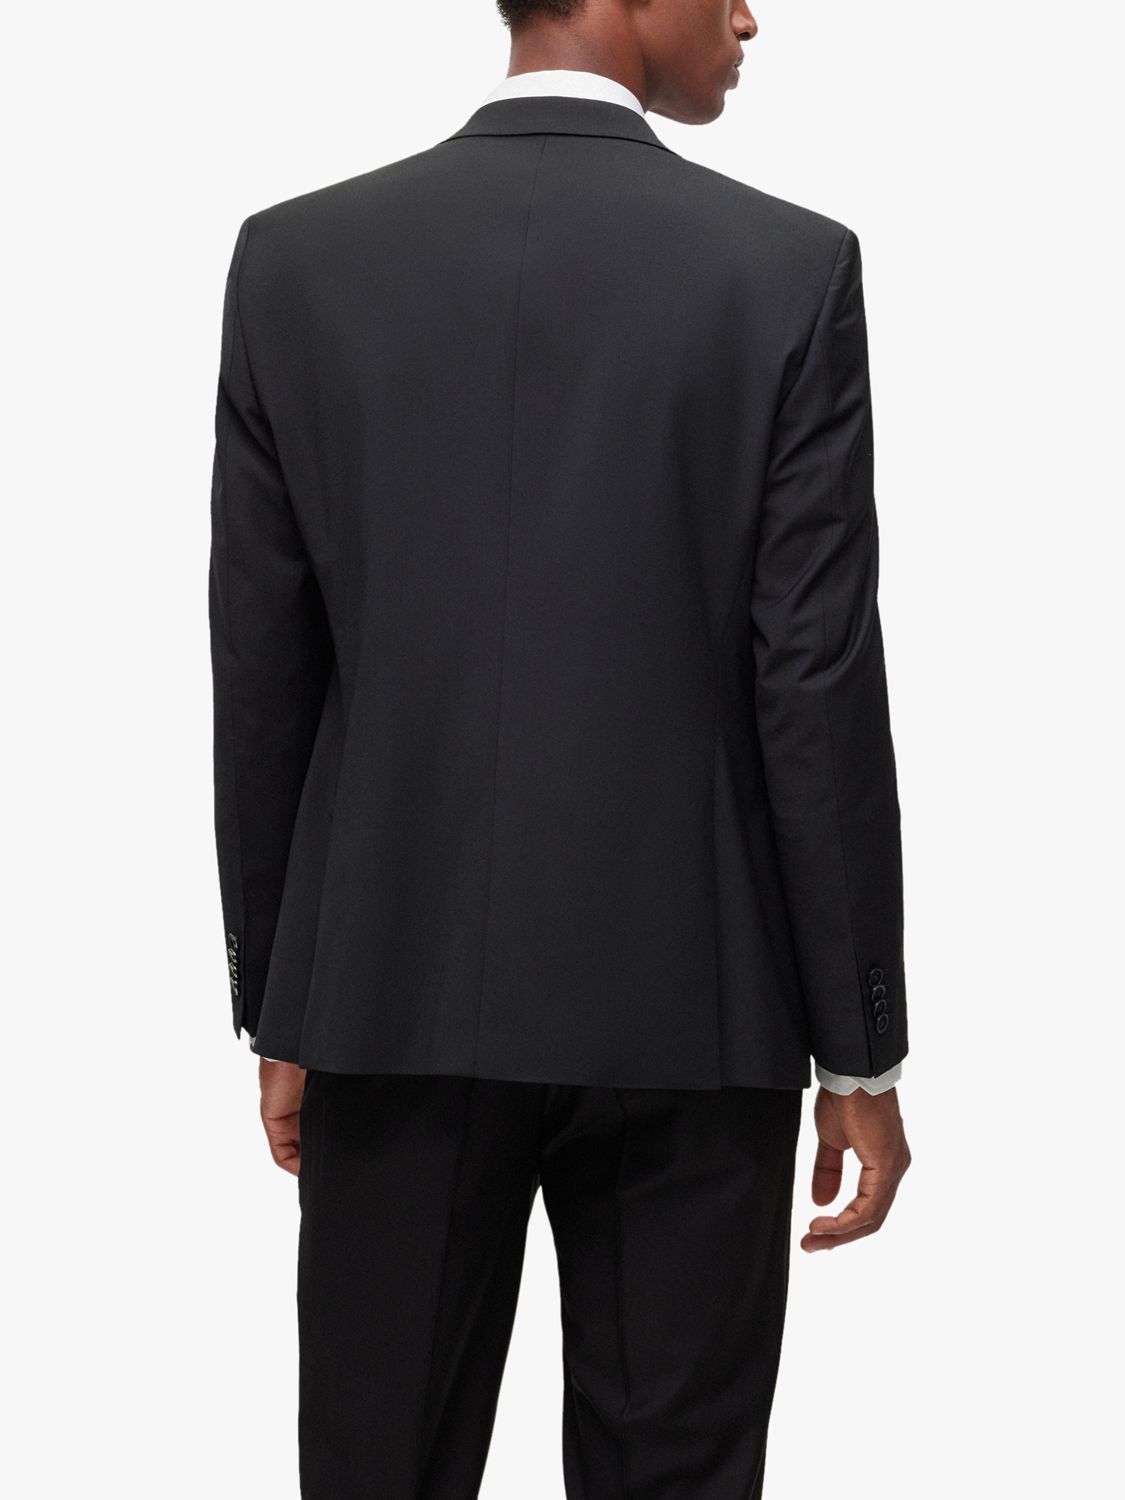 BOSS Jasper Wool Blend Suit Jacket, Black at John Lewis & Partners